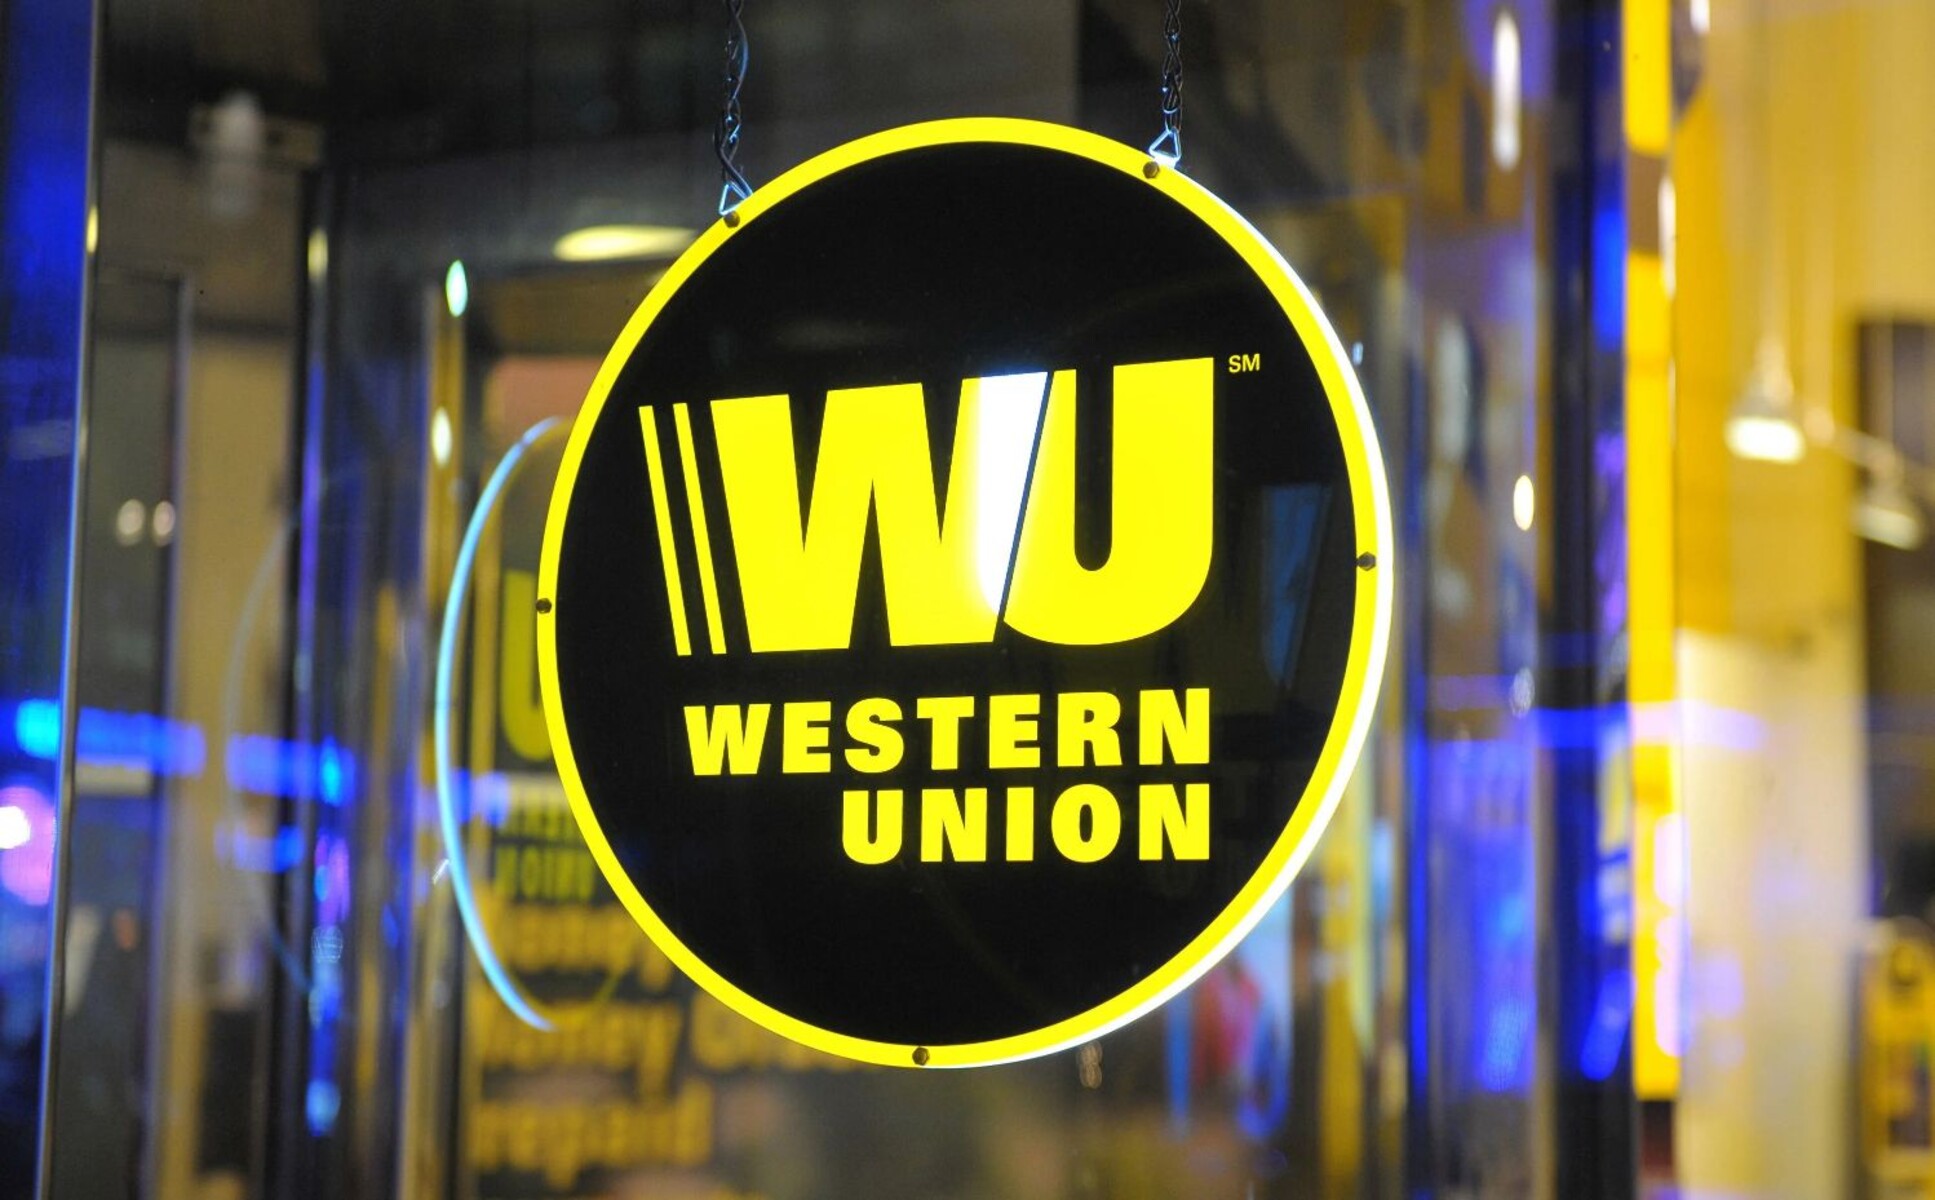 Western Union Money Order Limit